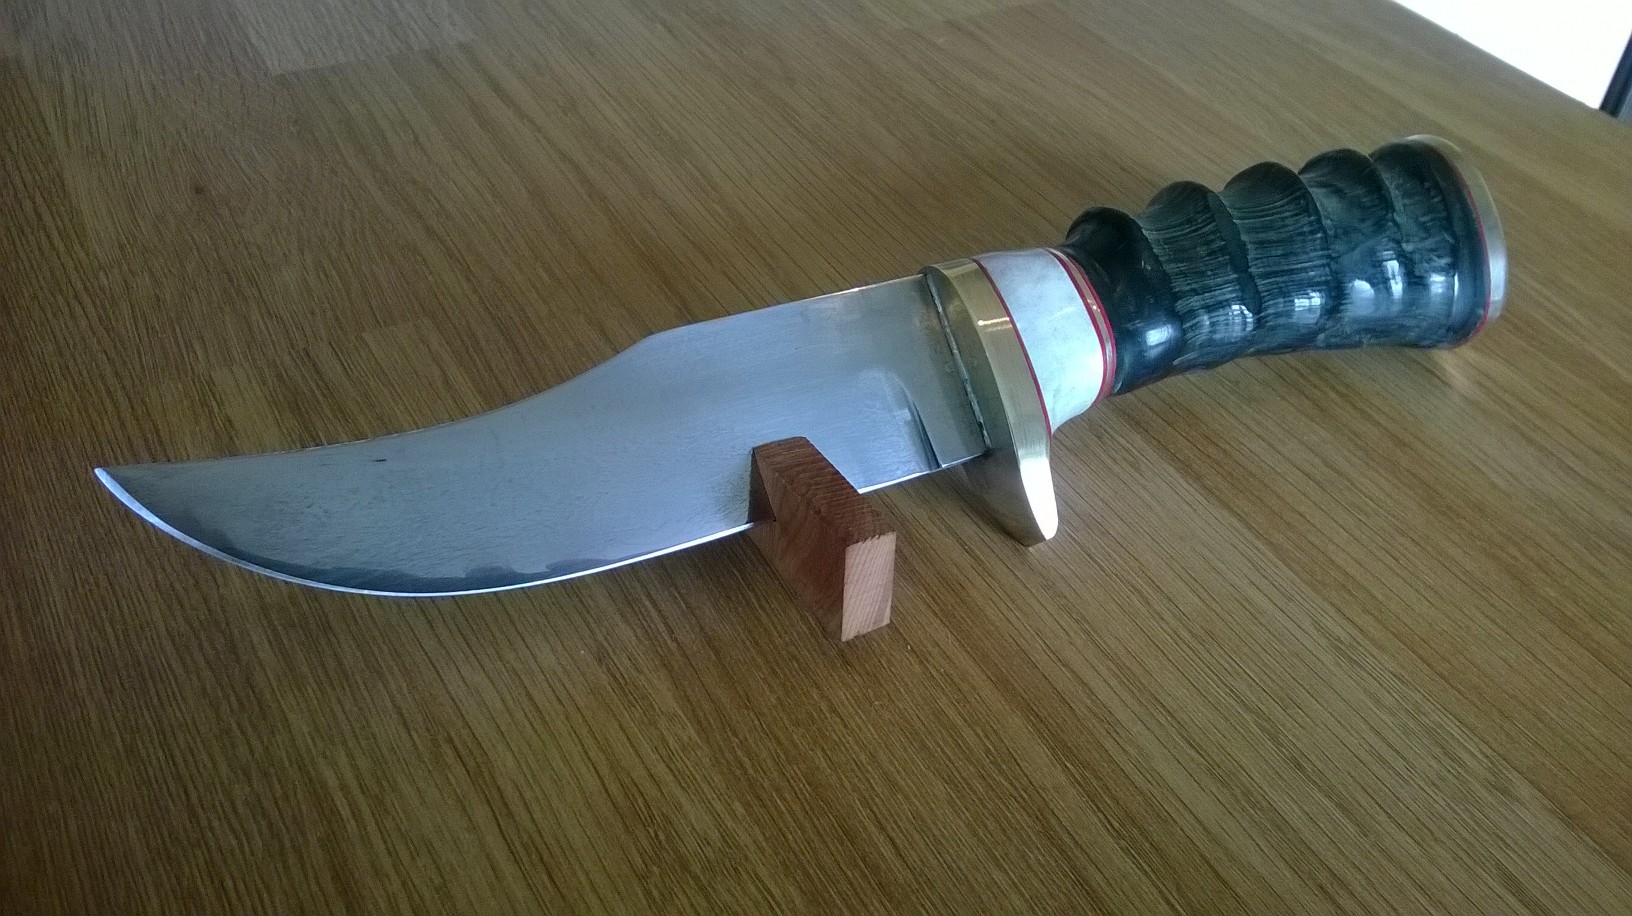 blesbok and rasp knife.jpg